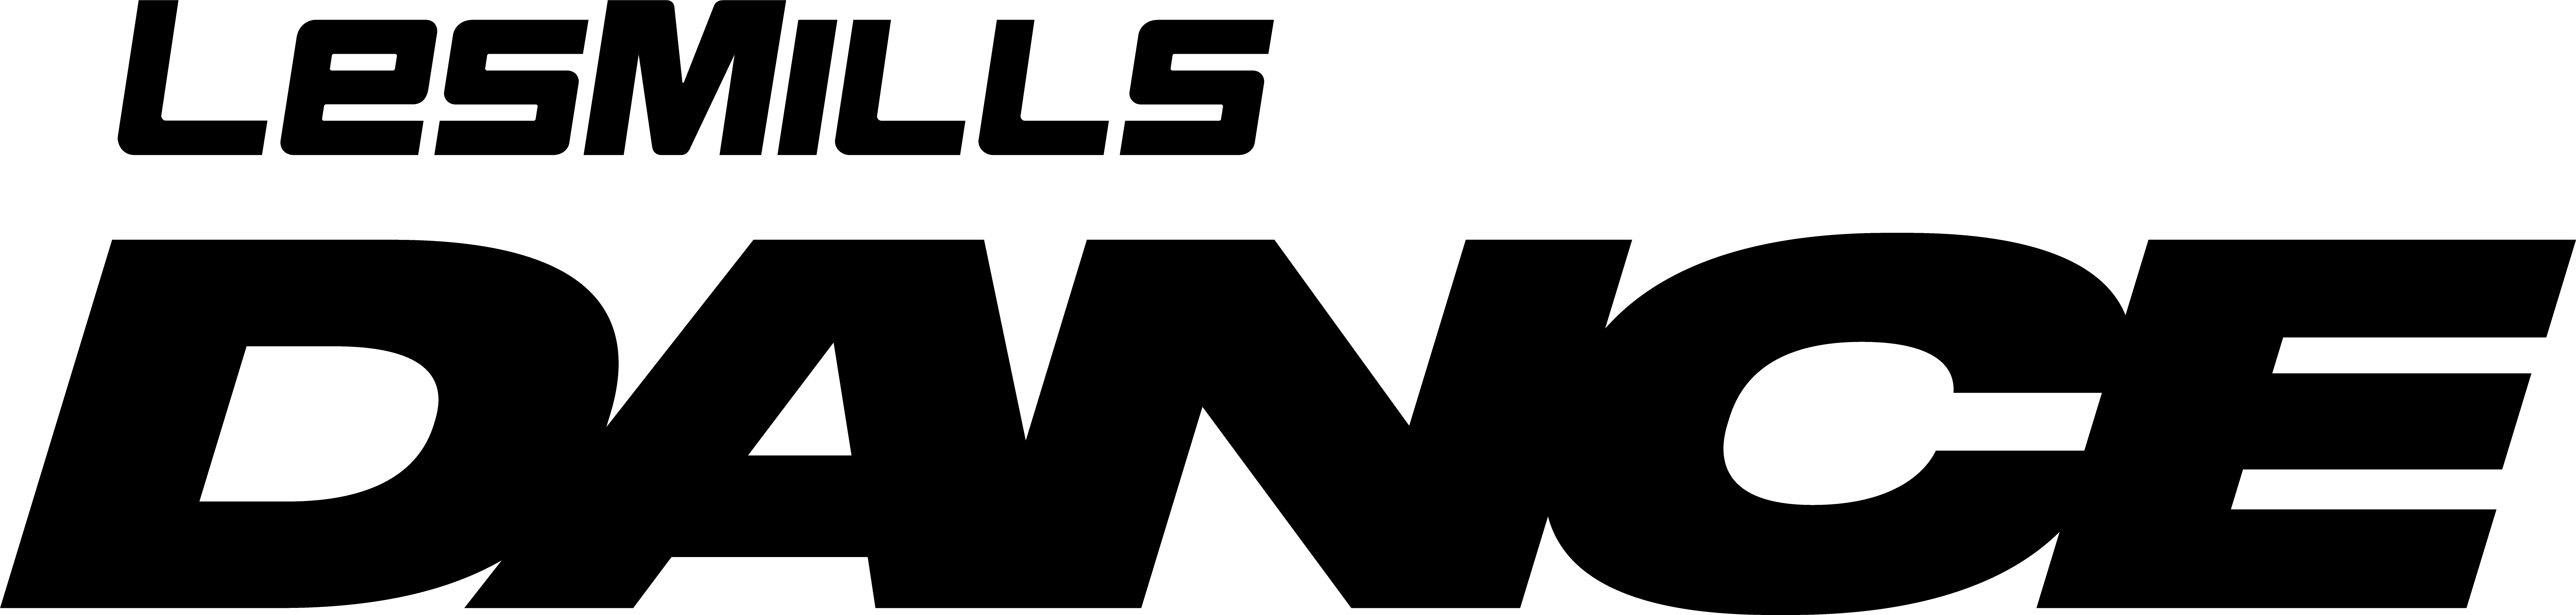 Les Mills Dance Logo Final Black